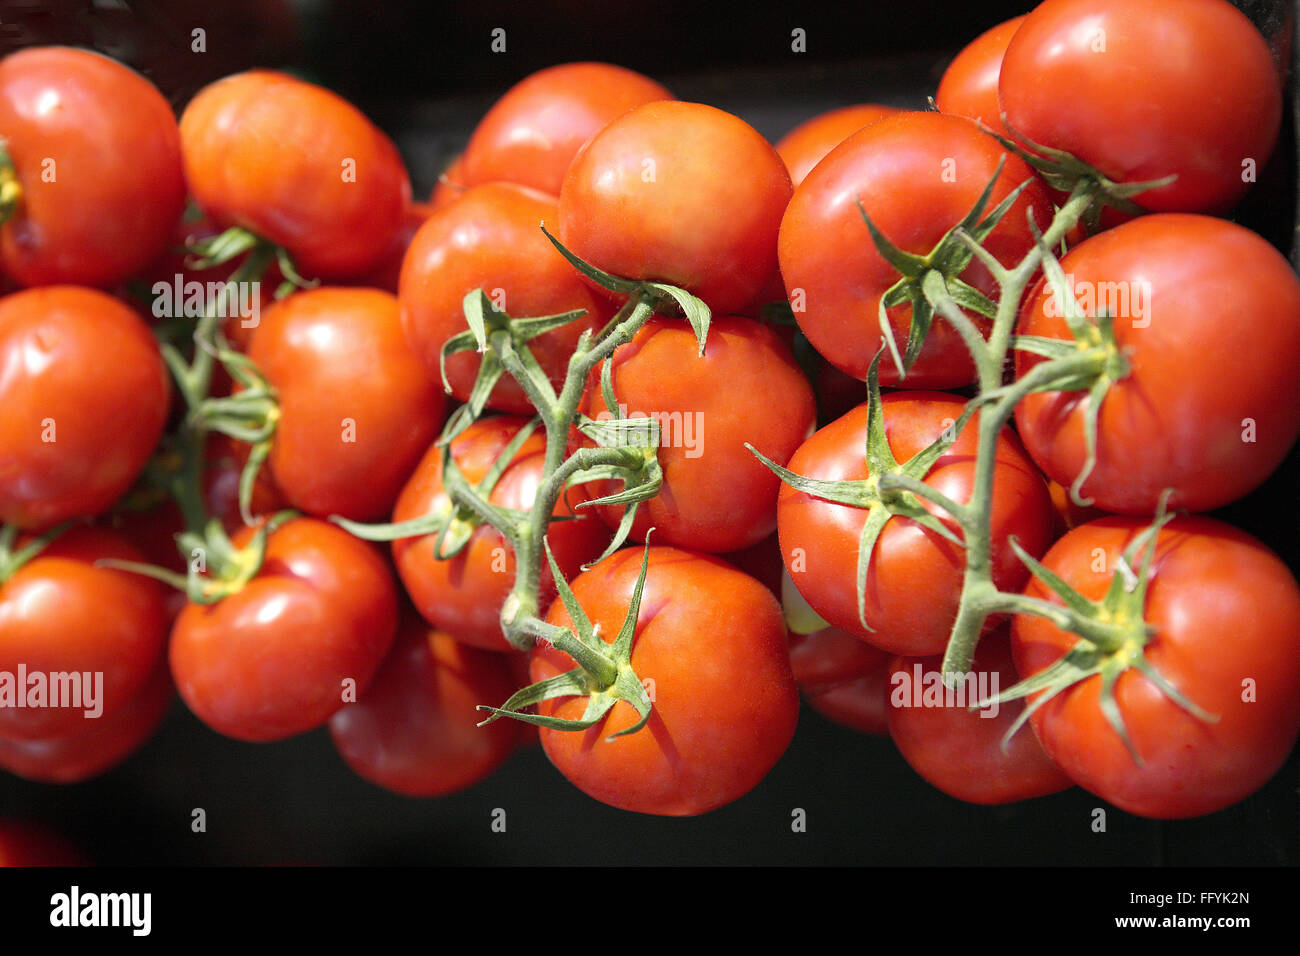 Vegetables of tomato India Stock Photo